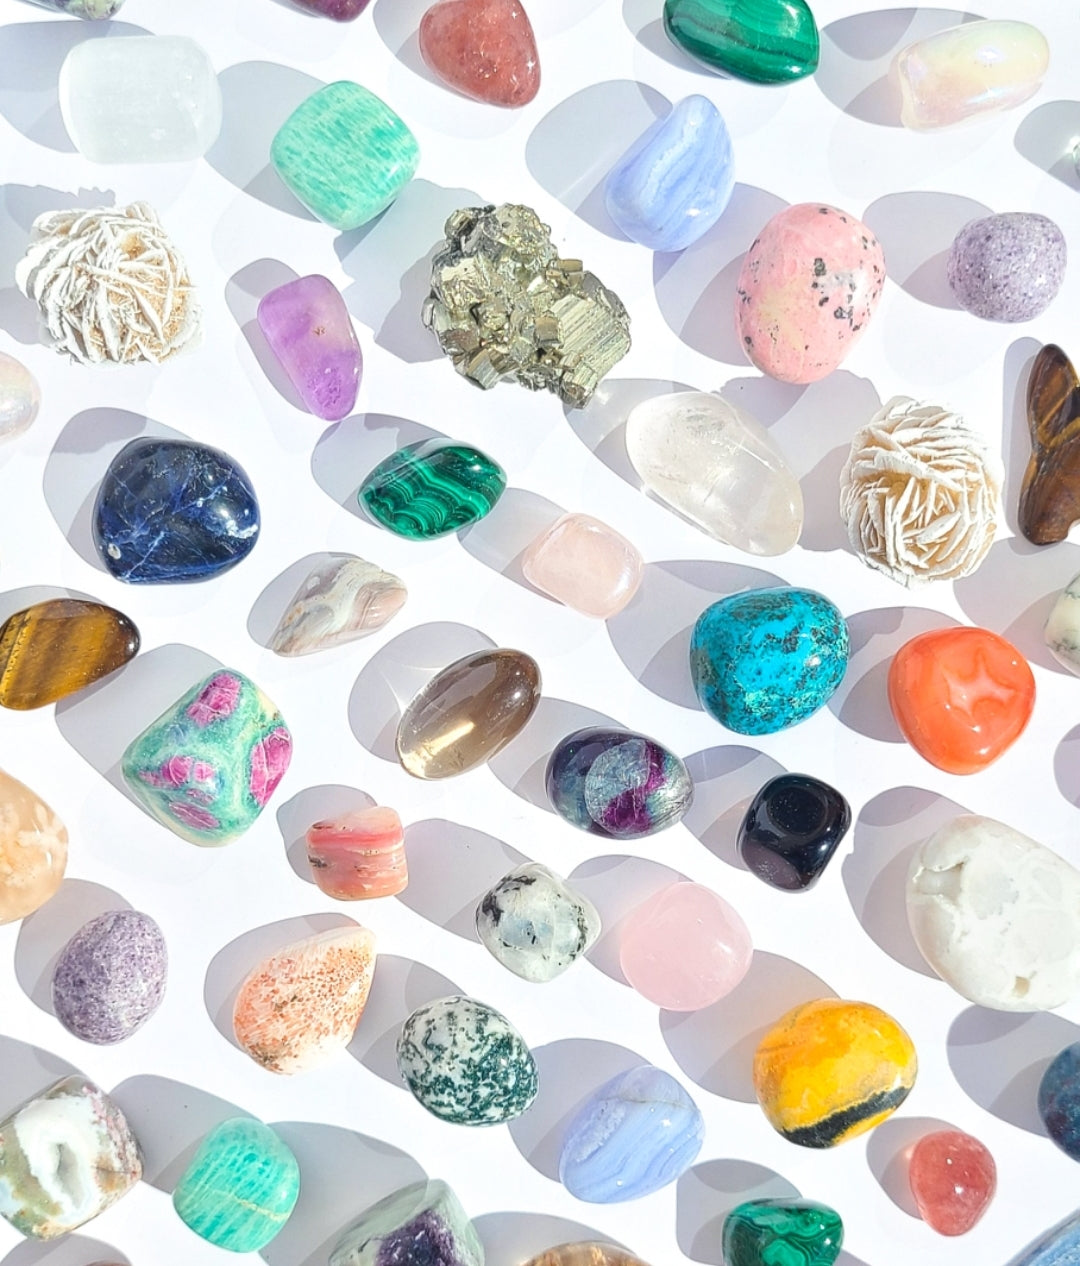 Bloom Crystals - Crystals to heal, align & indulge.